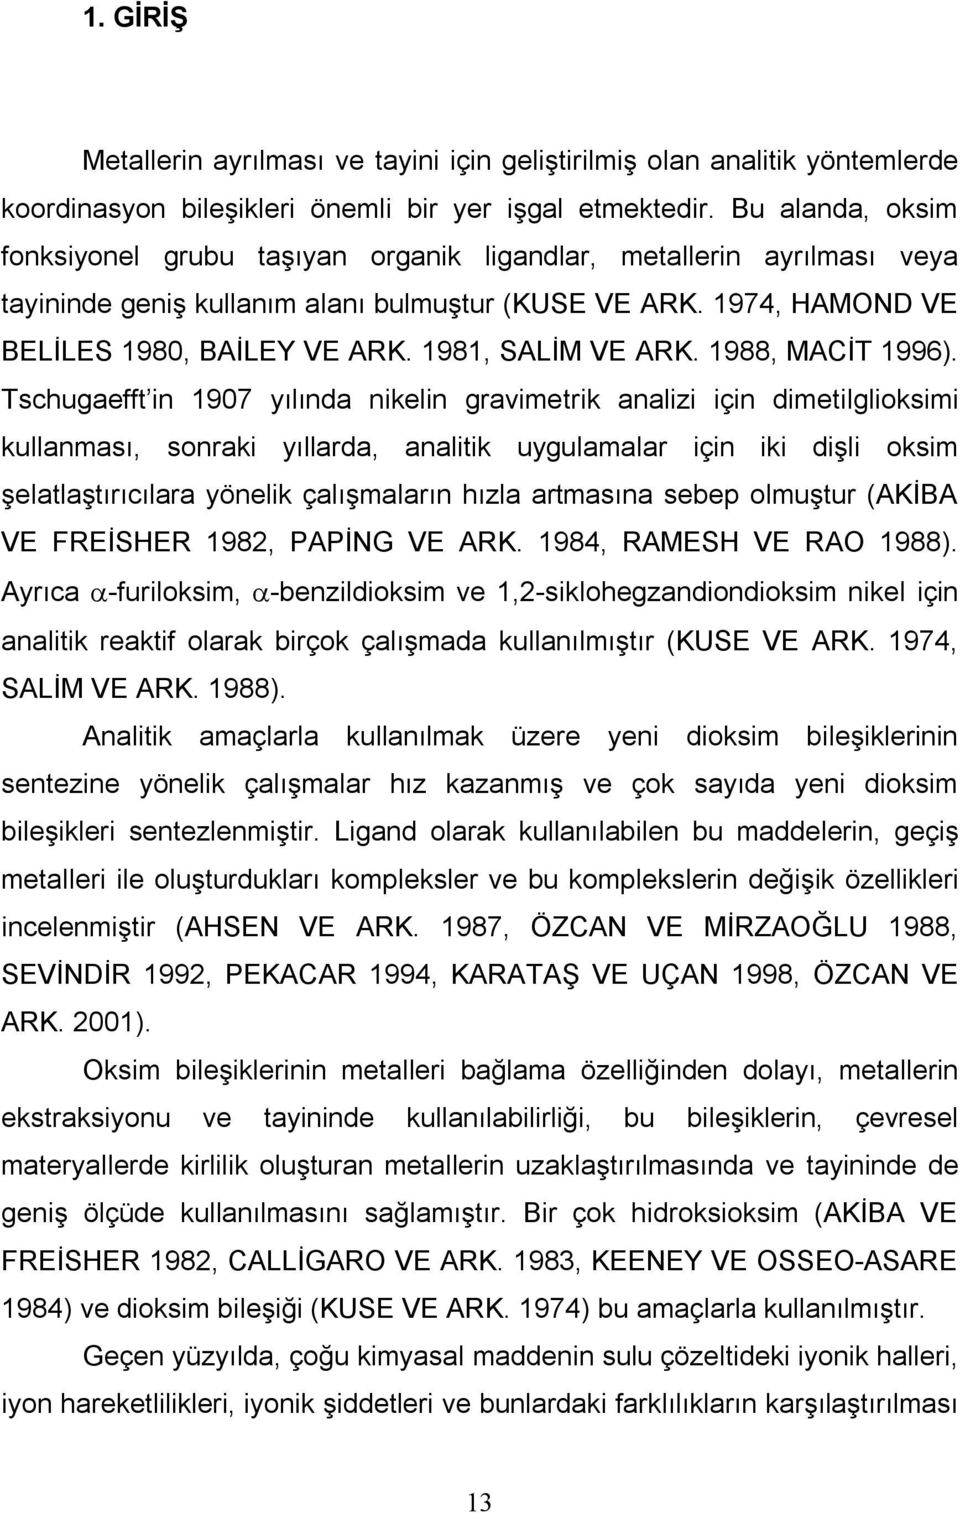 1981, SALİM VE ARK. 1988, MACİT 1996).